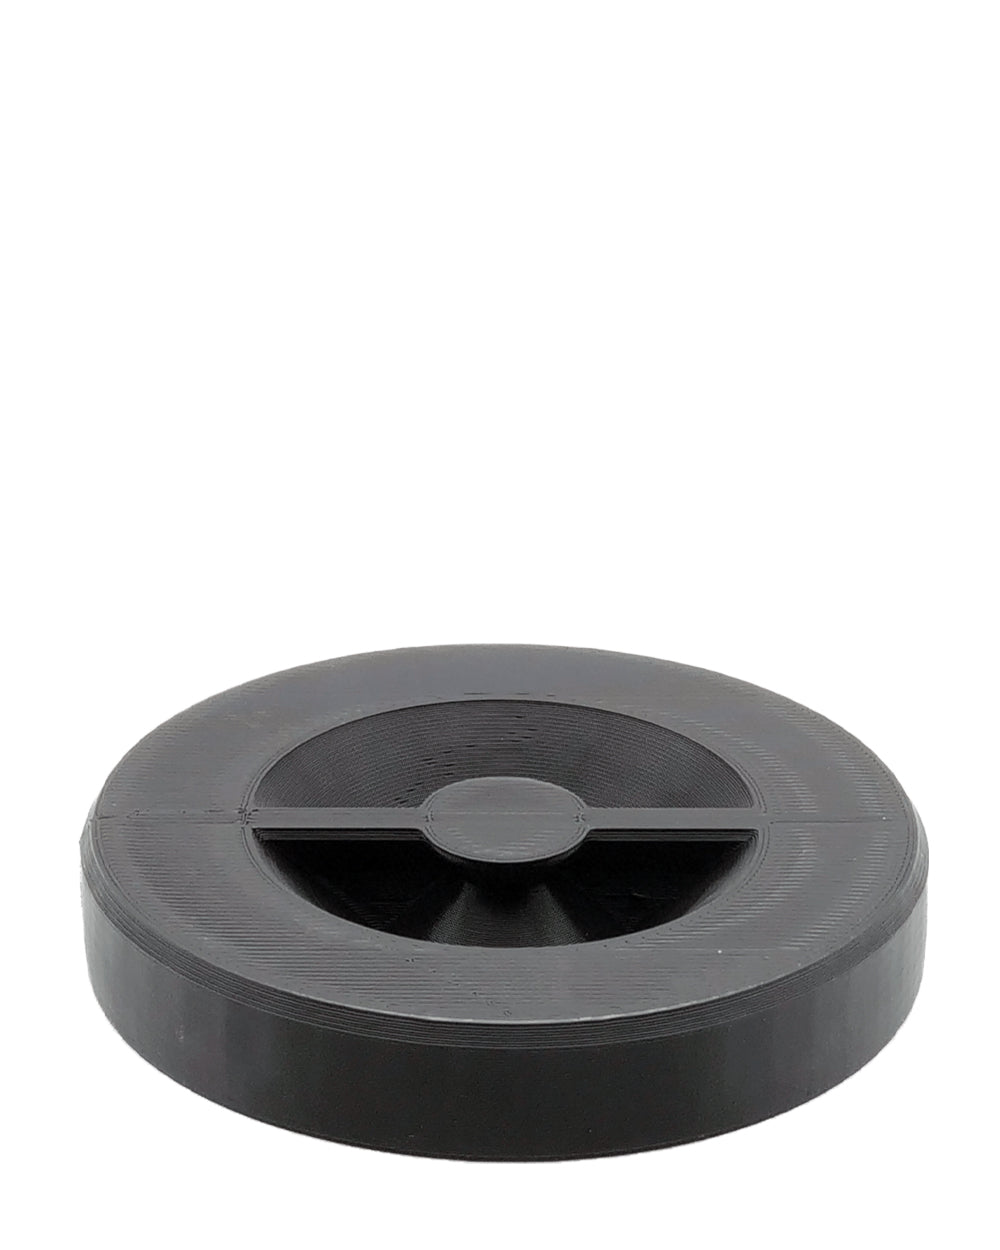 HUMBOLDT | Black Pre-Rolled Cones Filling Machine Starter Kit 98mm | Fill 55 Cones Per Run - 4